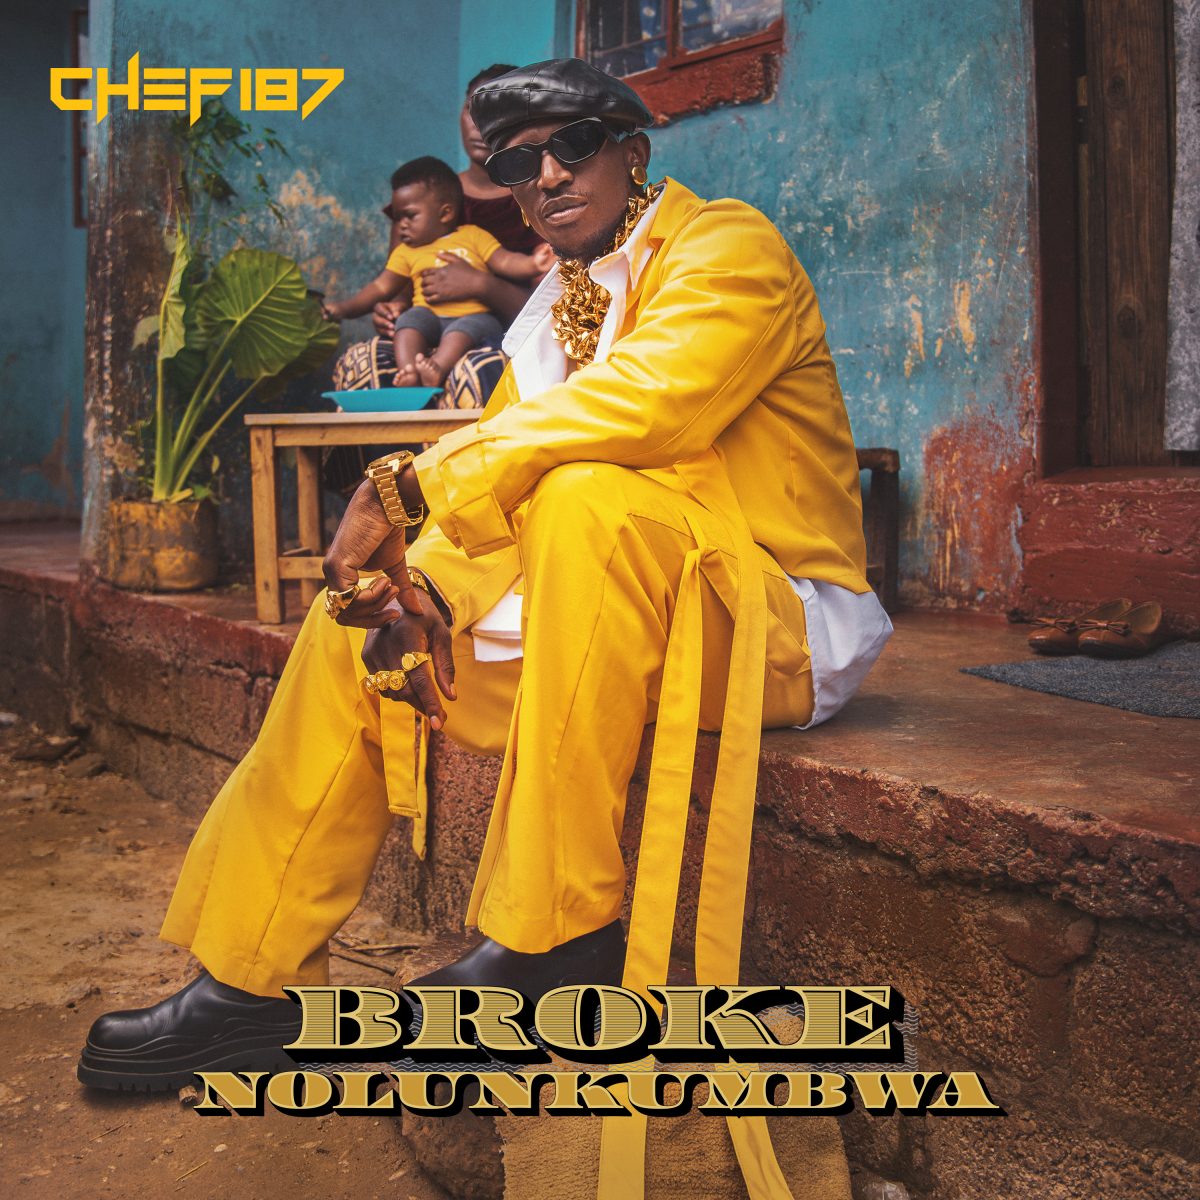 Chef 187 - Broke Nolunkumbwa Cover